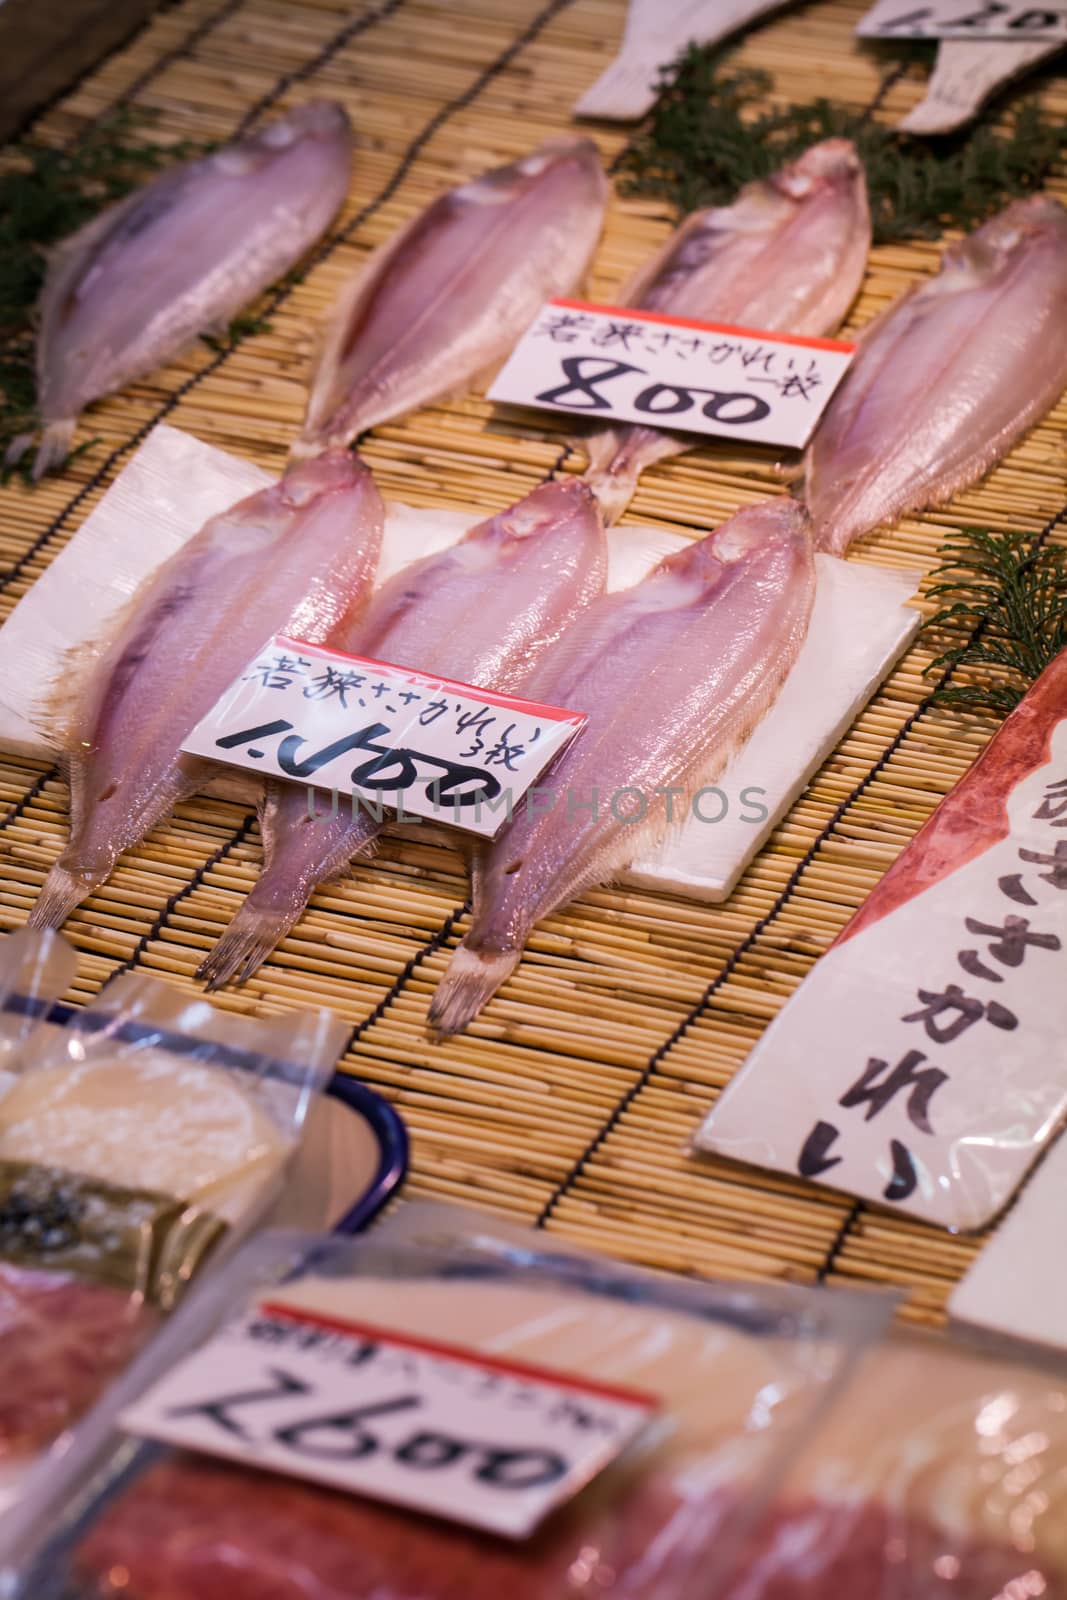 Fish Market, Japan. 